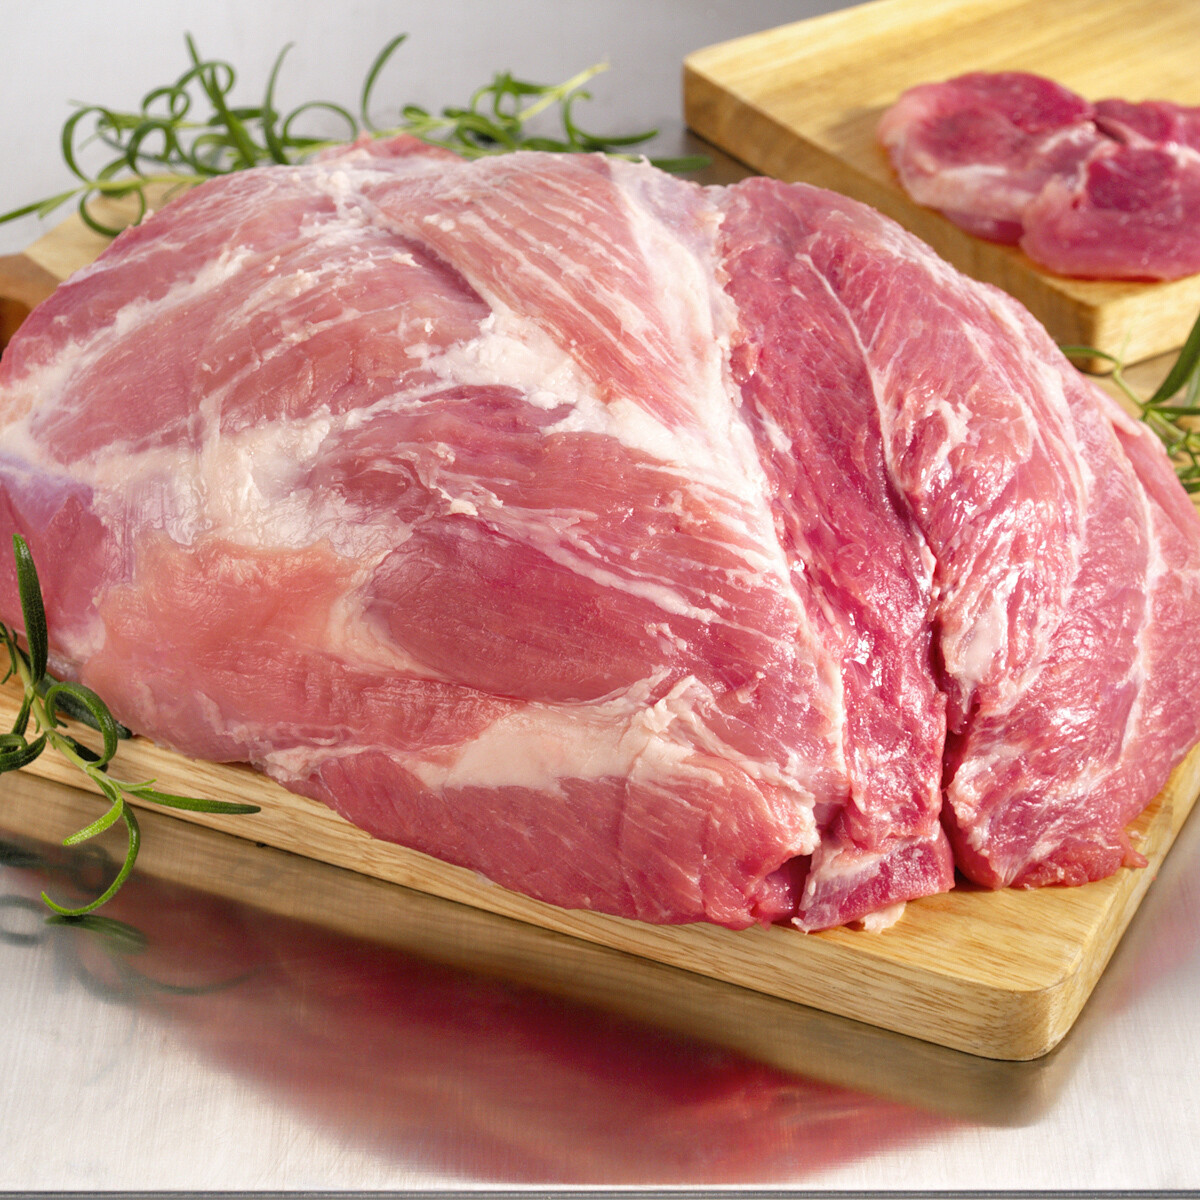 Berkshire Pork Ham Trim 2.9-3.25lbs 黑毛猪猪腿肉 原价 $9.99，現特價 $6.99/磅 ✨✨送致美斋黄豆酱一瓶!